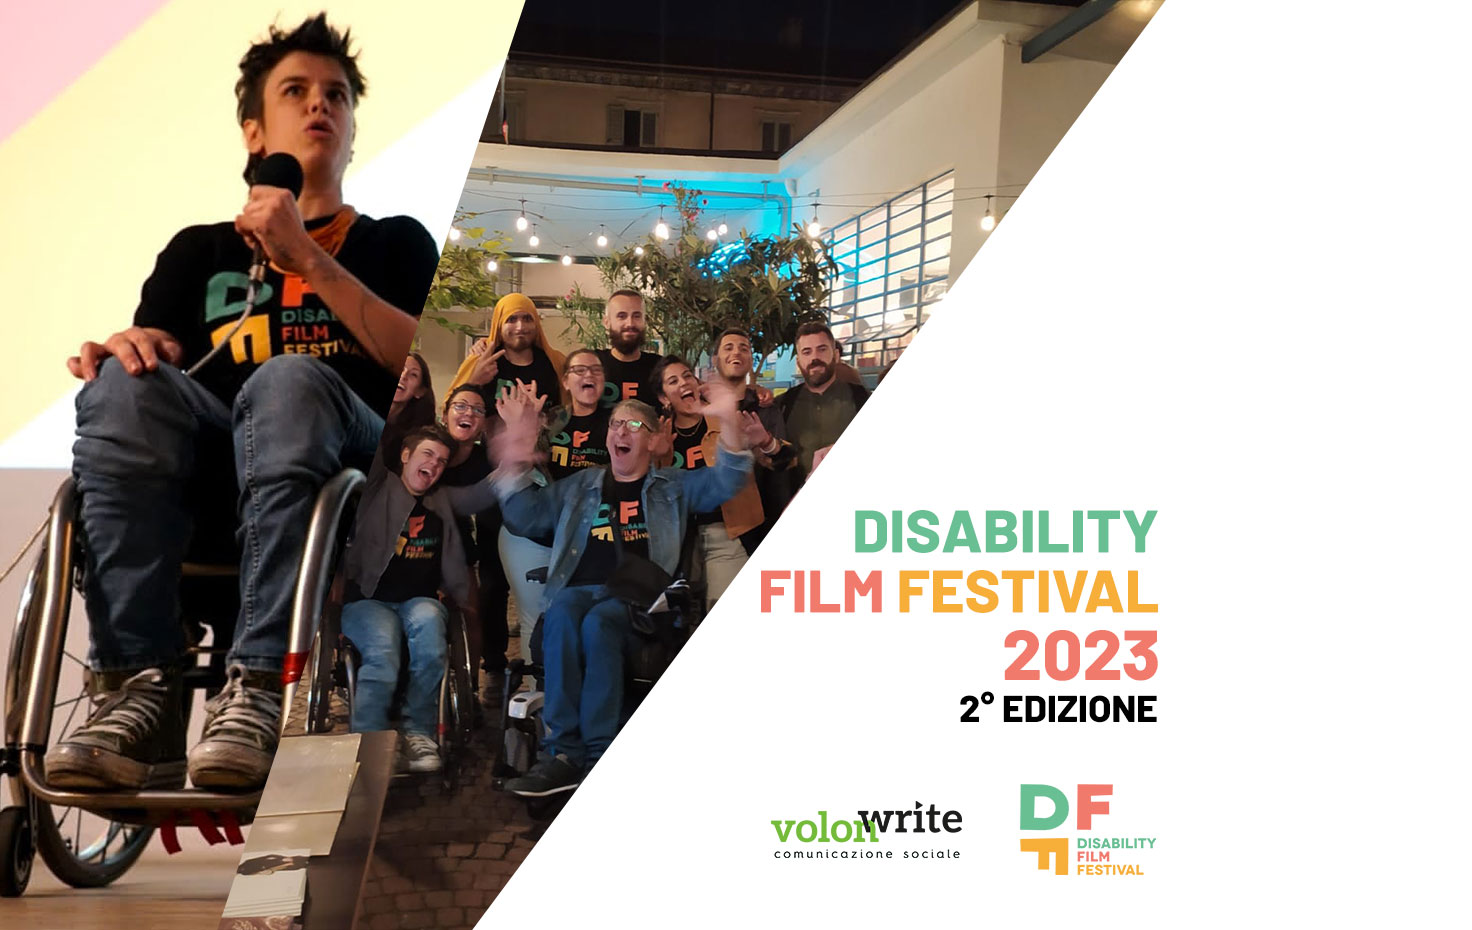 Disability Film Festival 2023